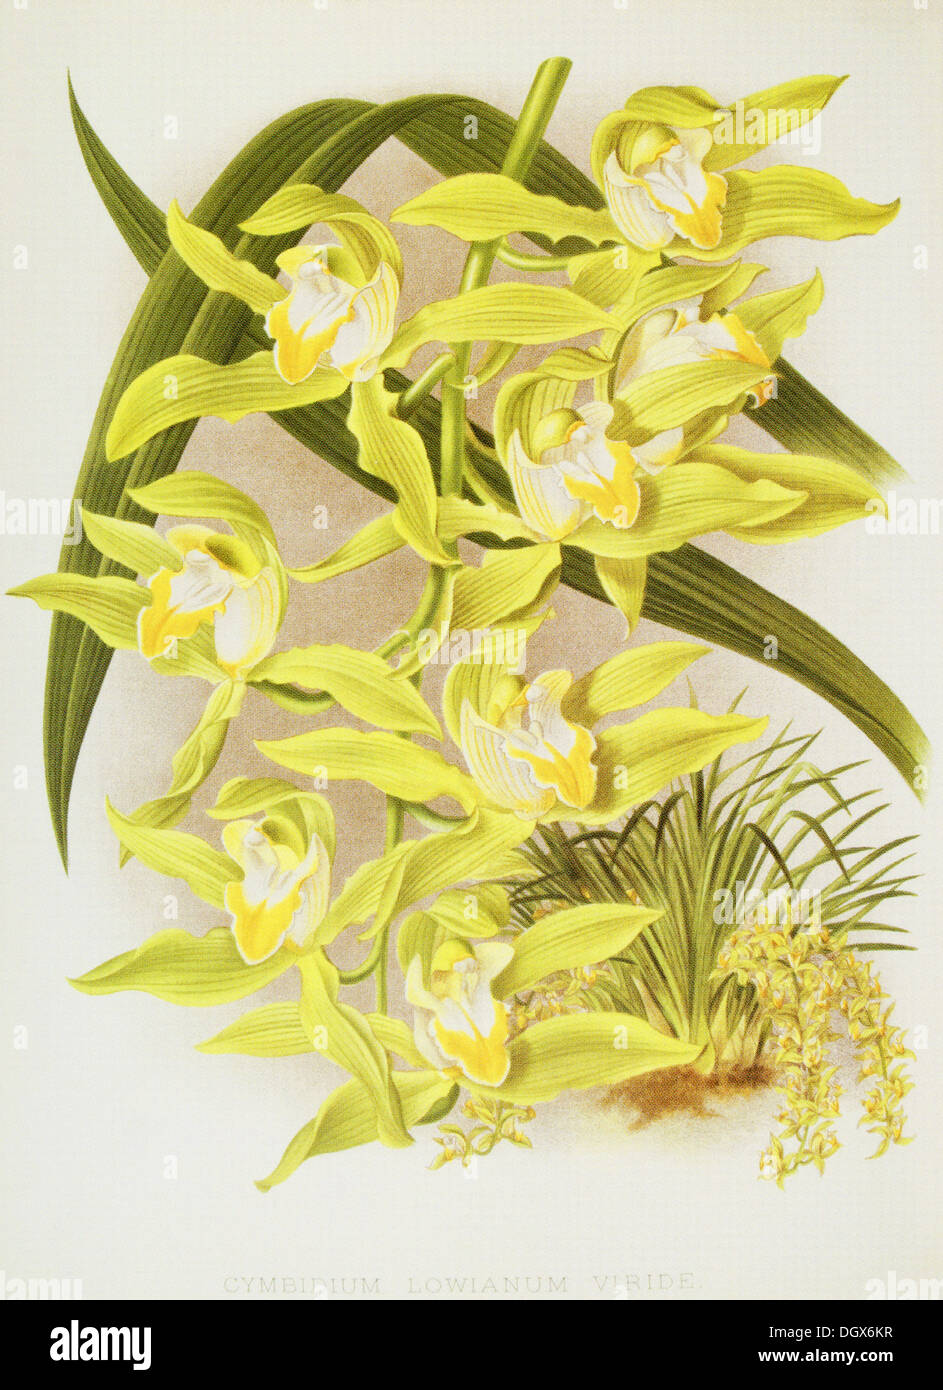 Indoor House or Office Plant Flowering Cymbidium Orchid Wilhelmina Orange Blooms 